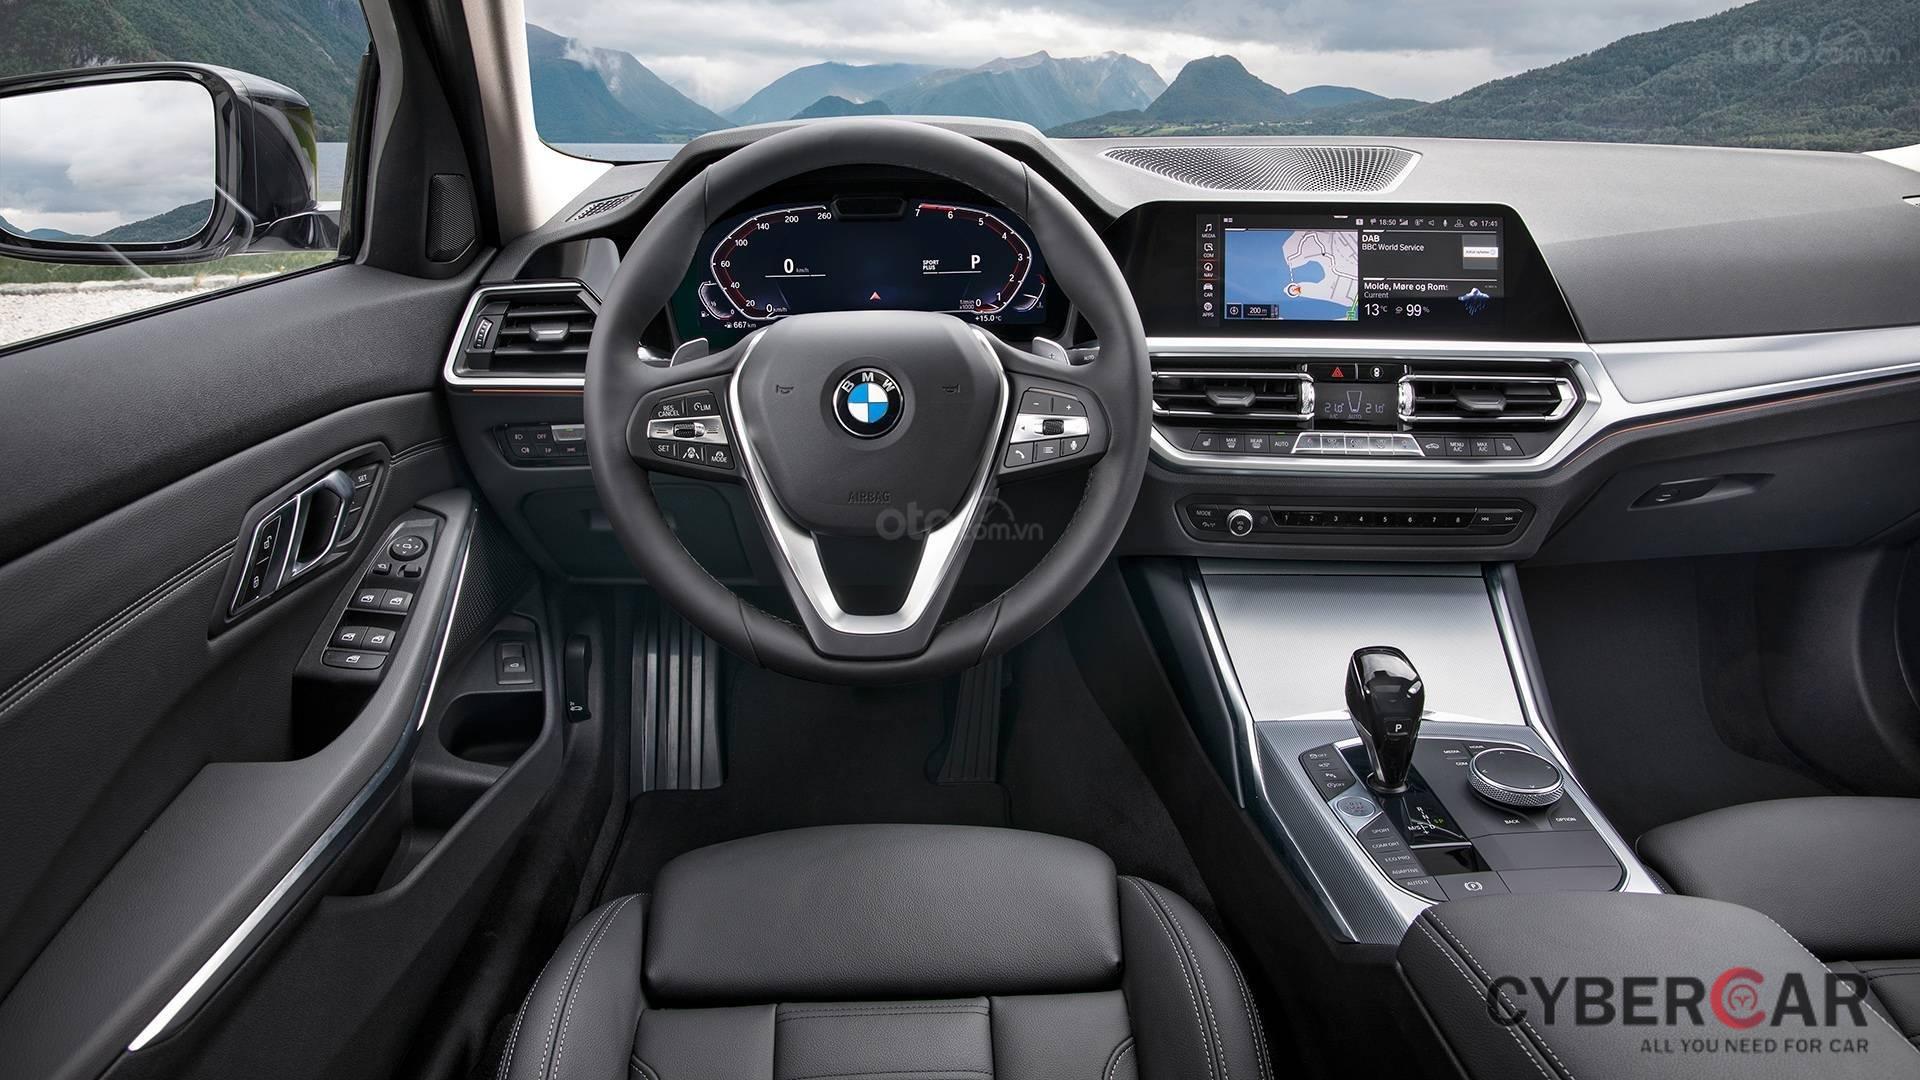 Nội thất BMW 3-Series 2019